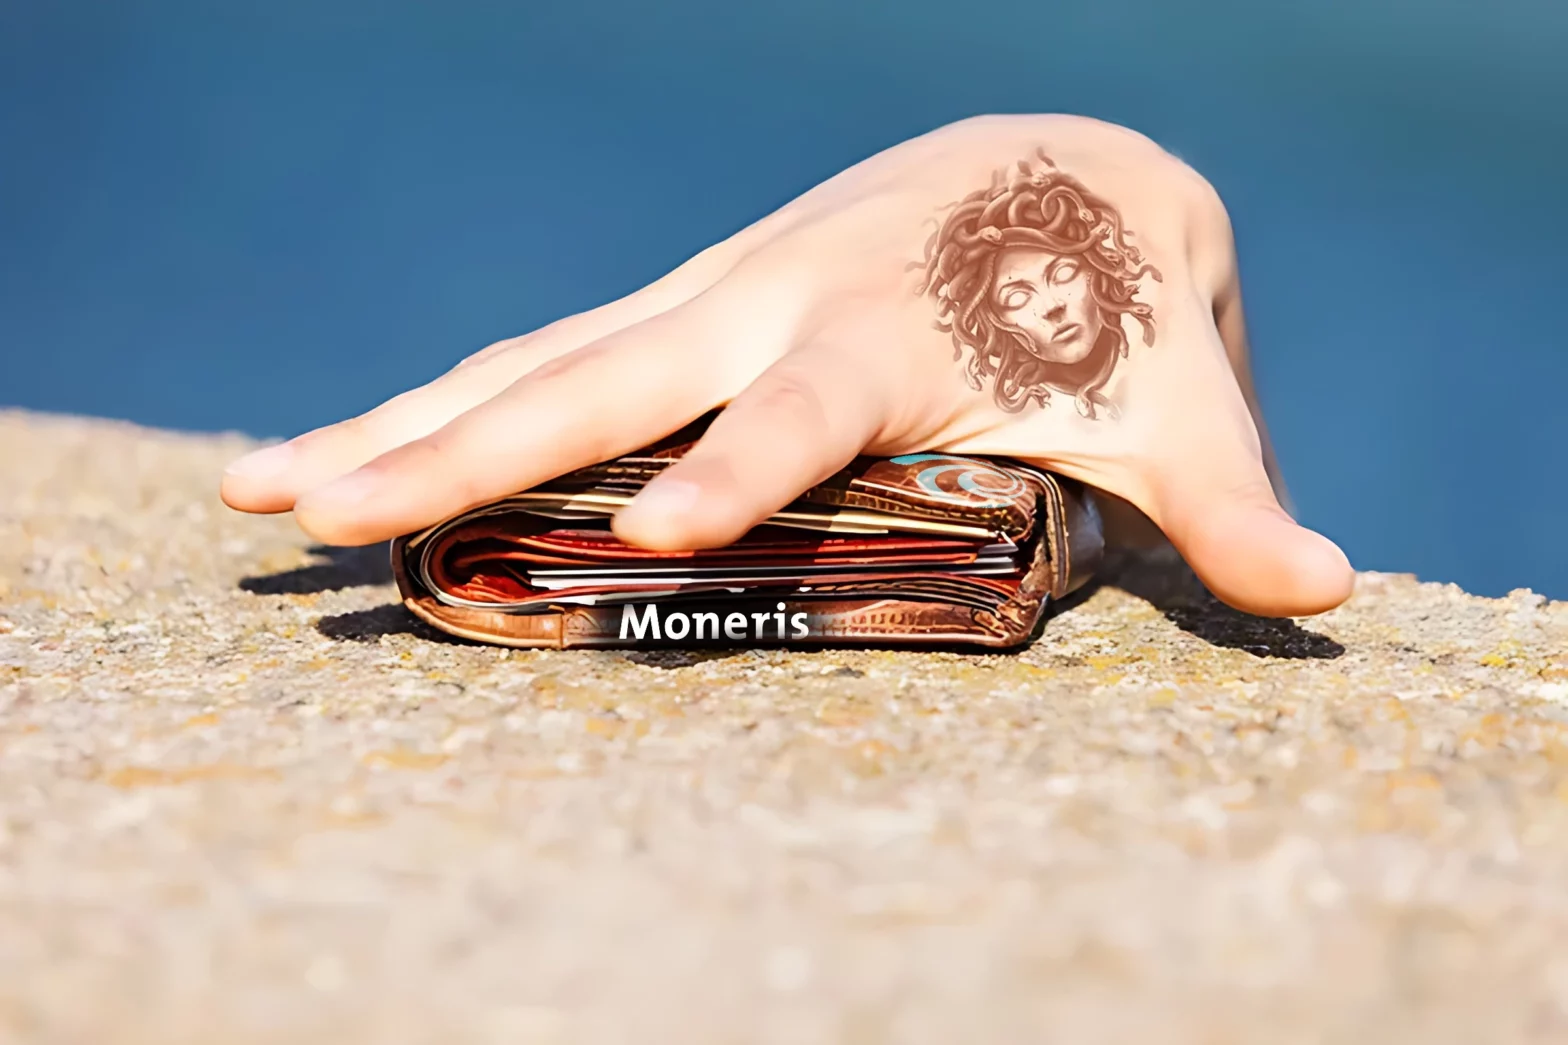 Moneris claimed by Medusa ransomware